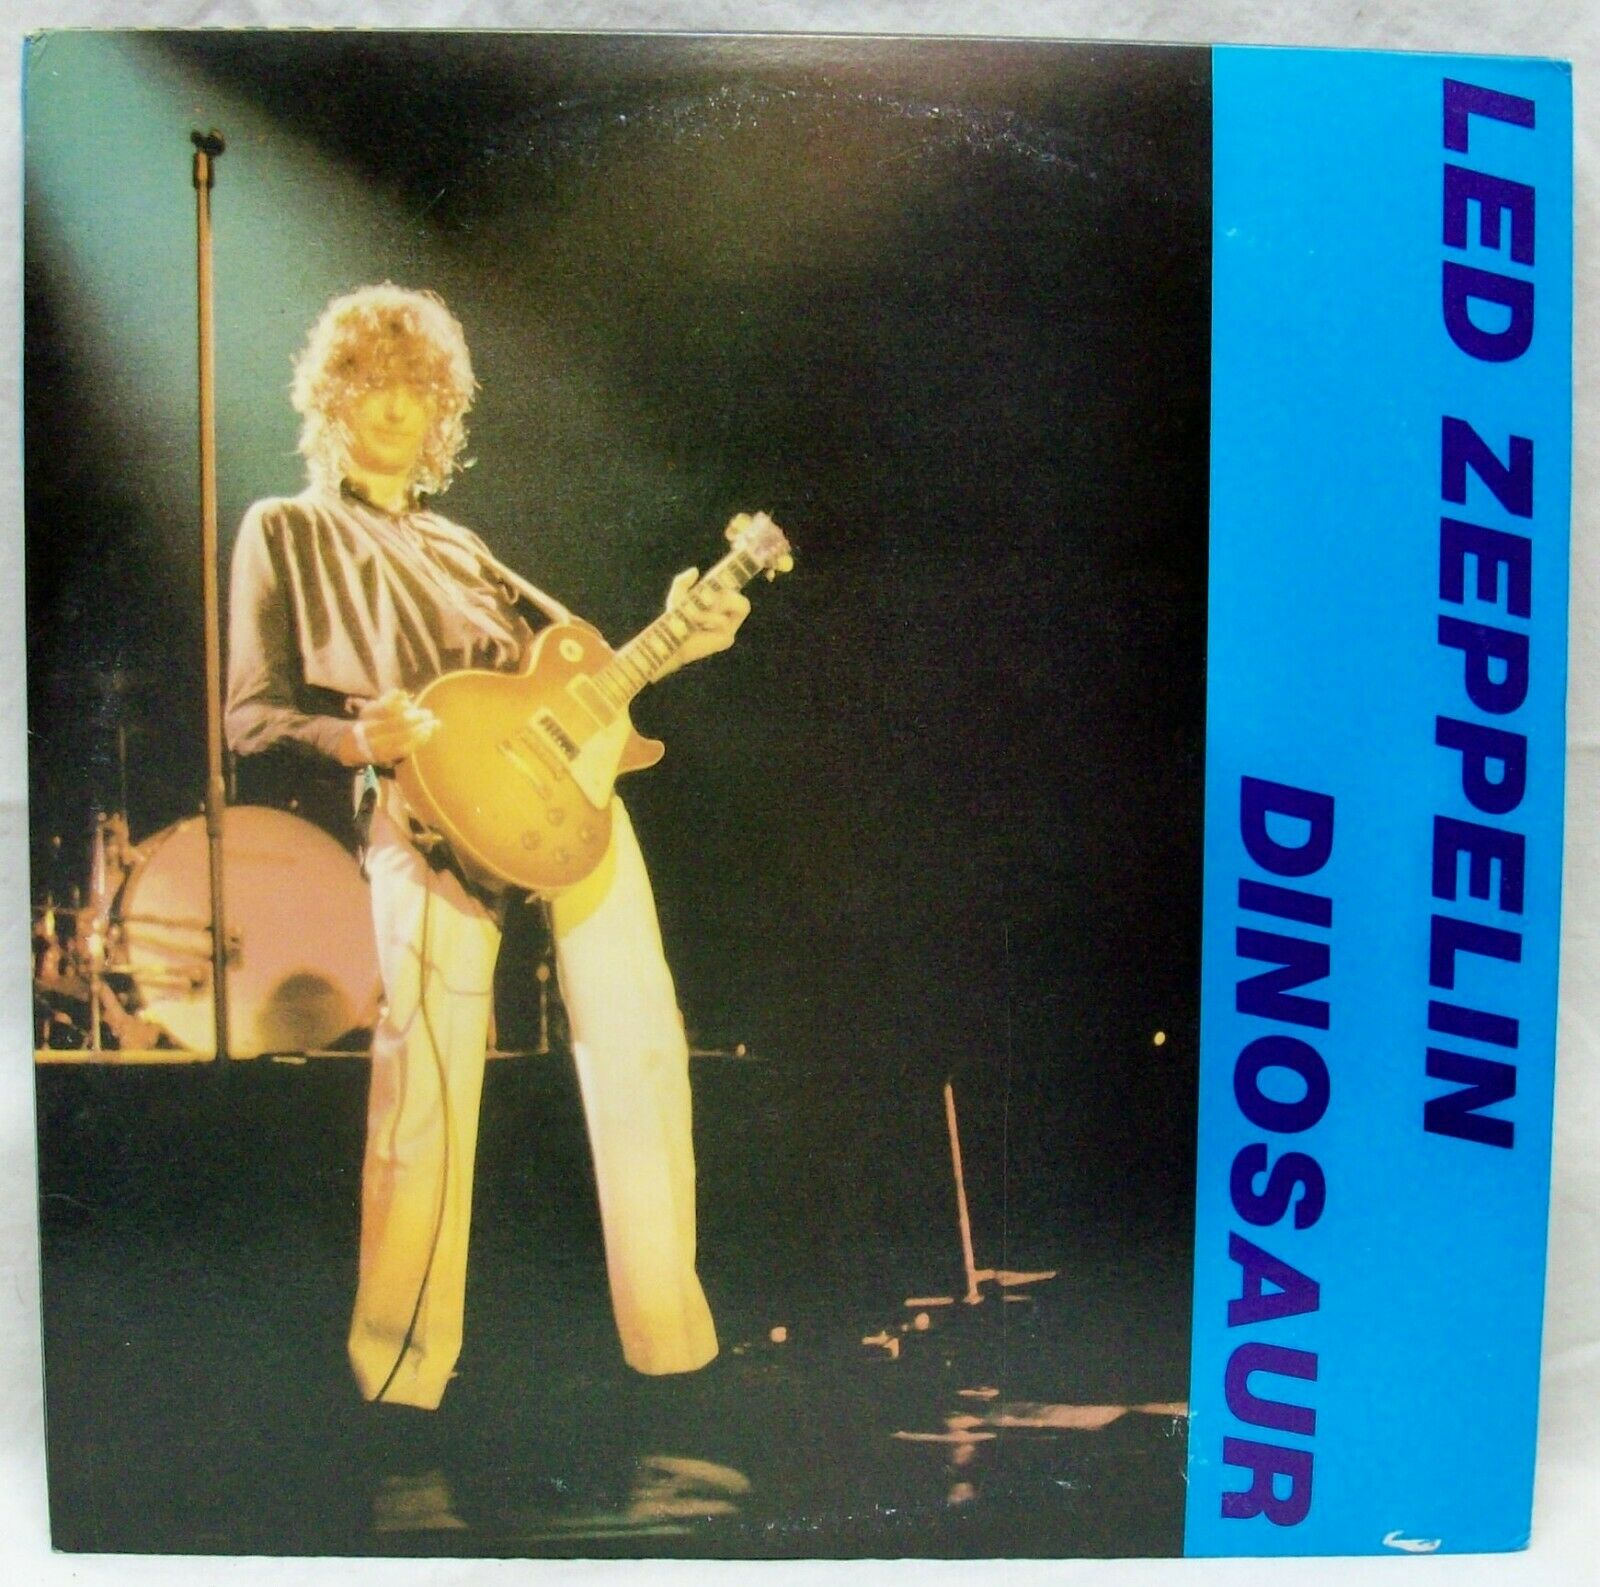 1985 Led Zeppelin "Dinosaur" 2-LP Vinyl Record (WAG 1939) NM/EX 1980 Live Show